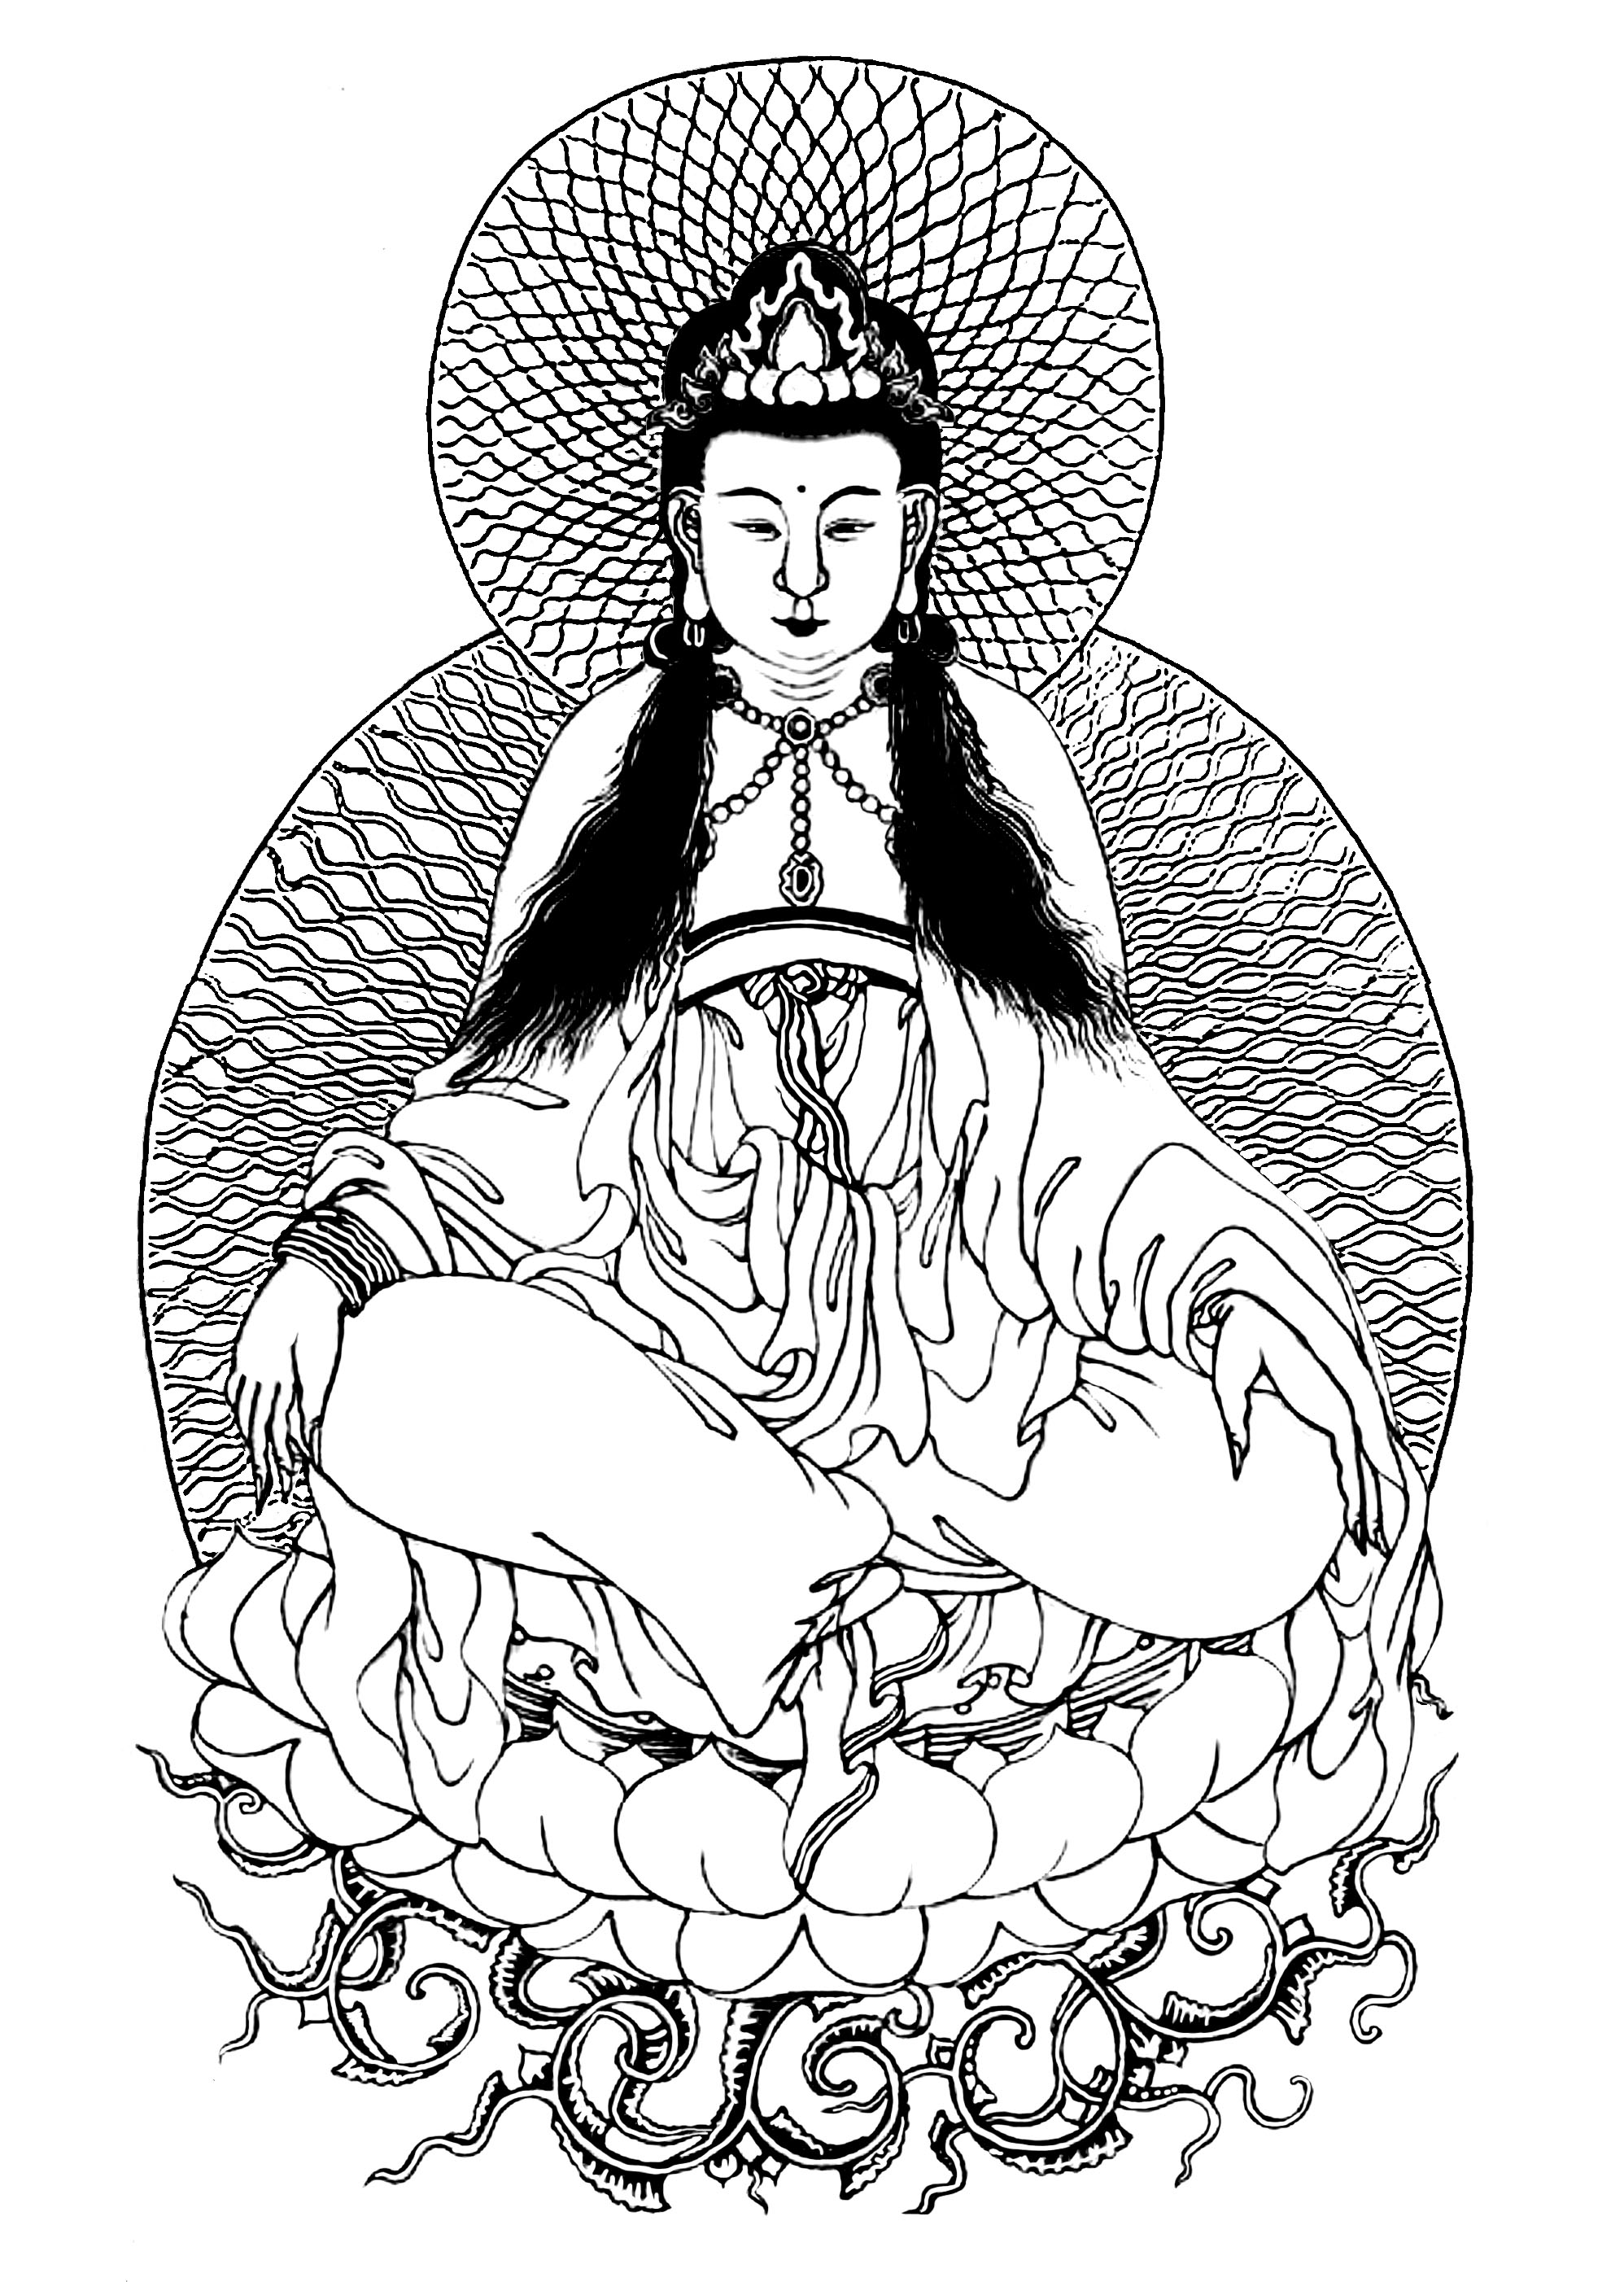 Guanyn: A Deusa Budista da Misericórdia. Coloração inspirada numa pintura de Xingru Wang